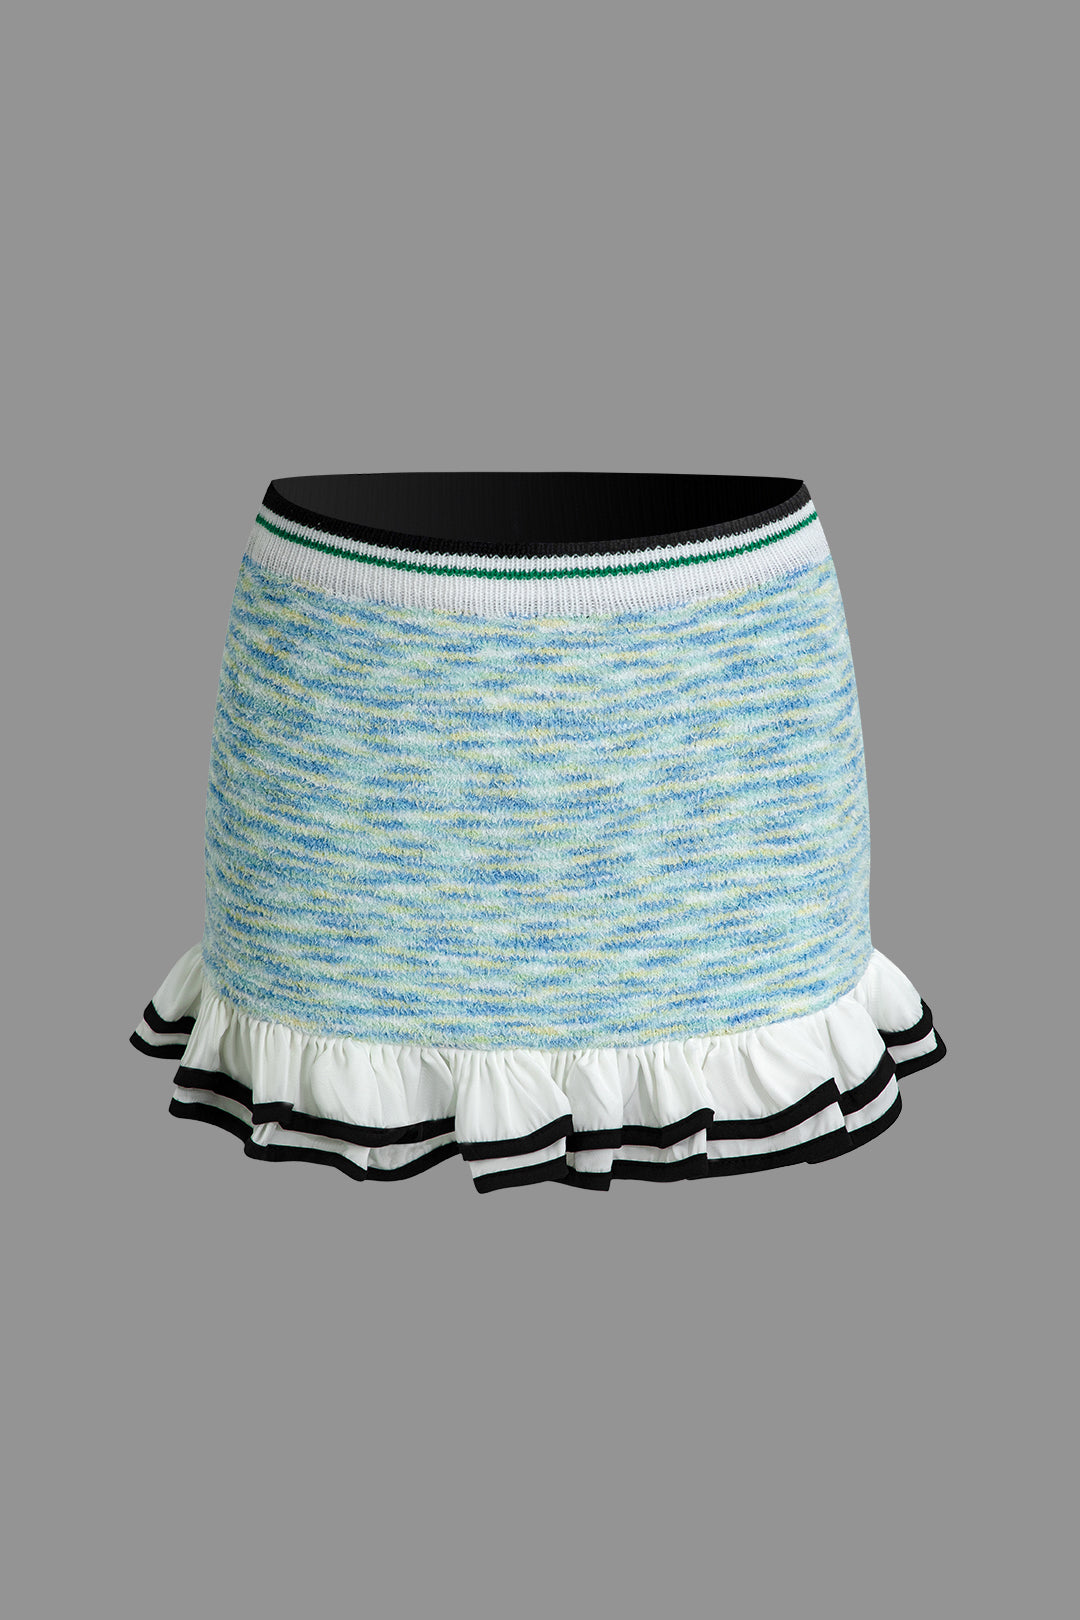 V-Neck Sleeveless Knit Tank Top And Ruffle Mini Skirt Set